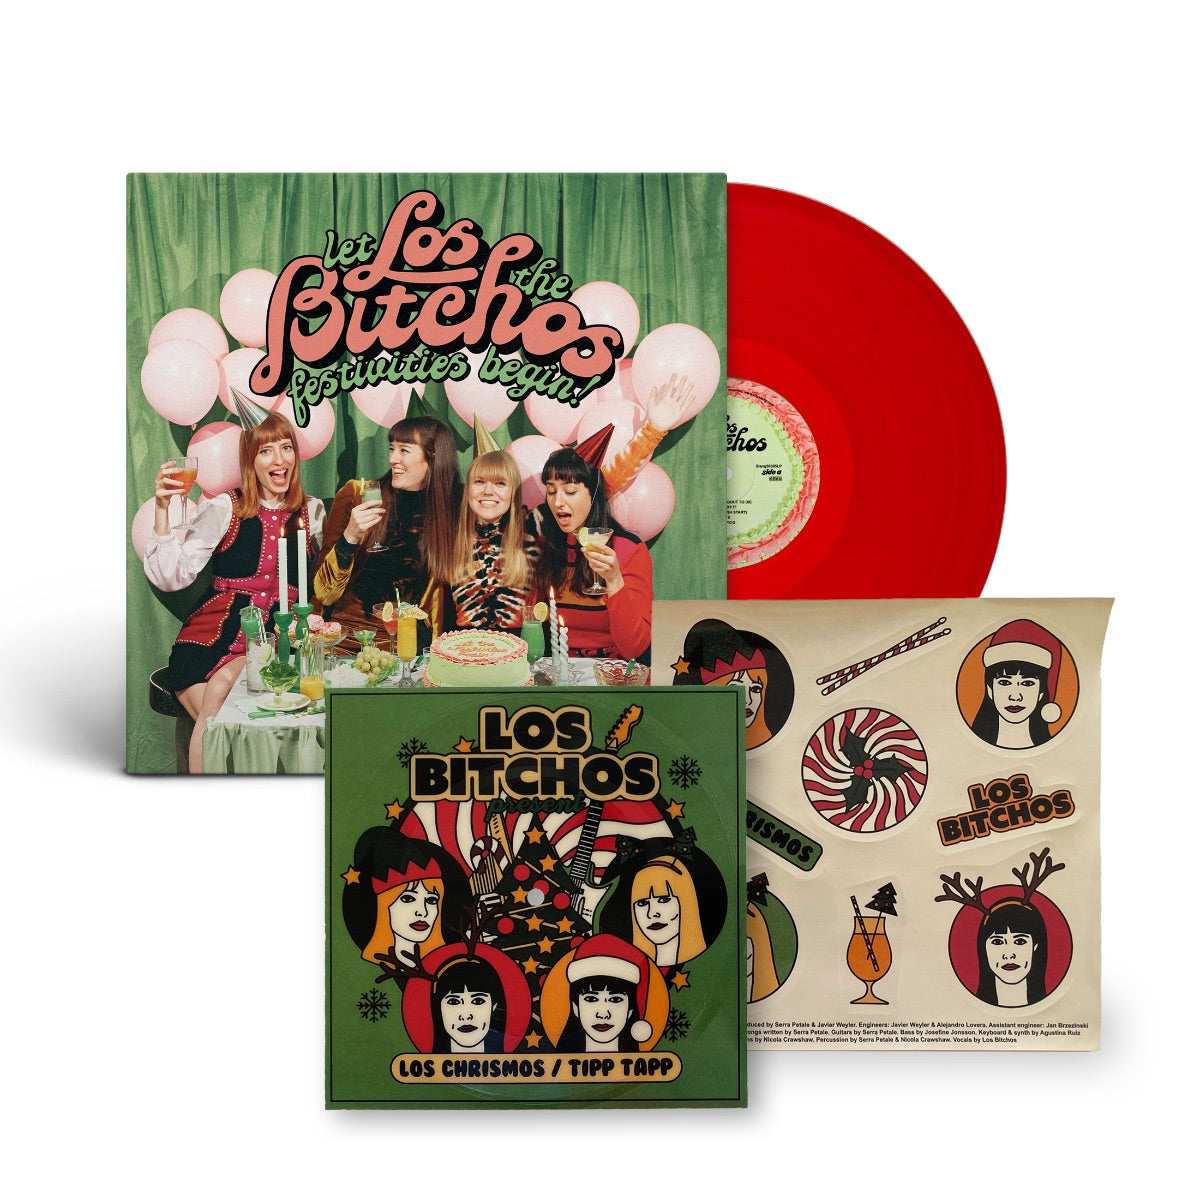 Los Bitchos - Let The Festivities Begin (Los Chrismos Edition): Red Vinyl LP w/ Bonus Flexi 7" + Sticker Pack